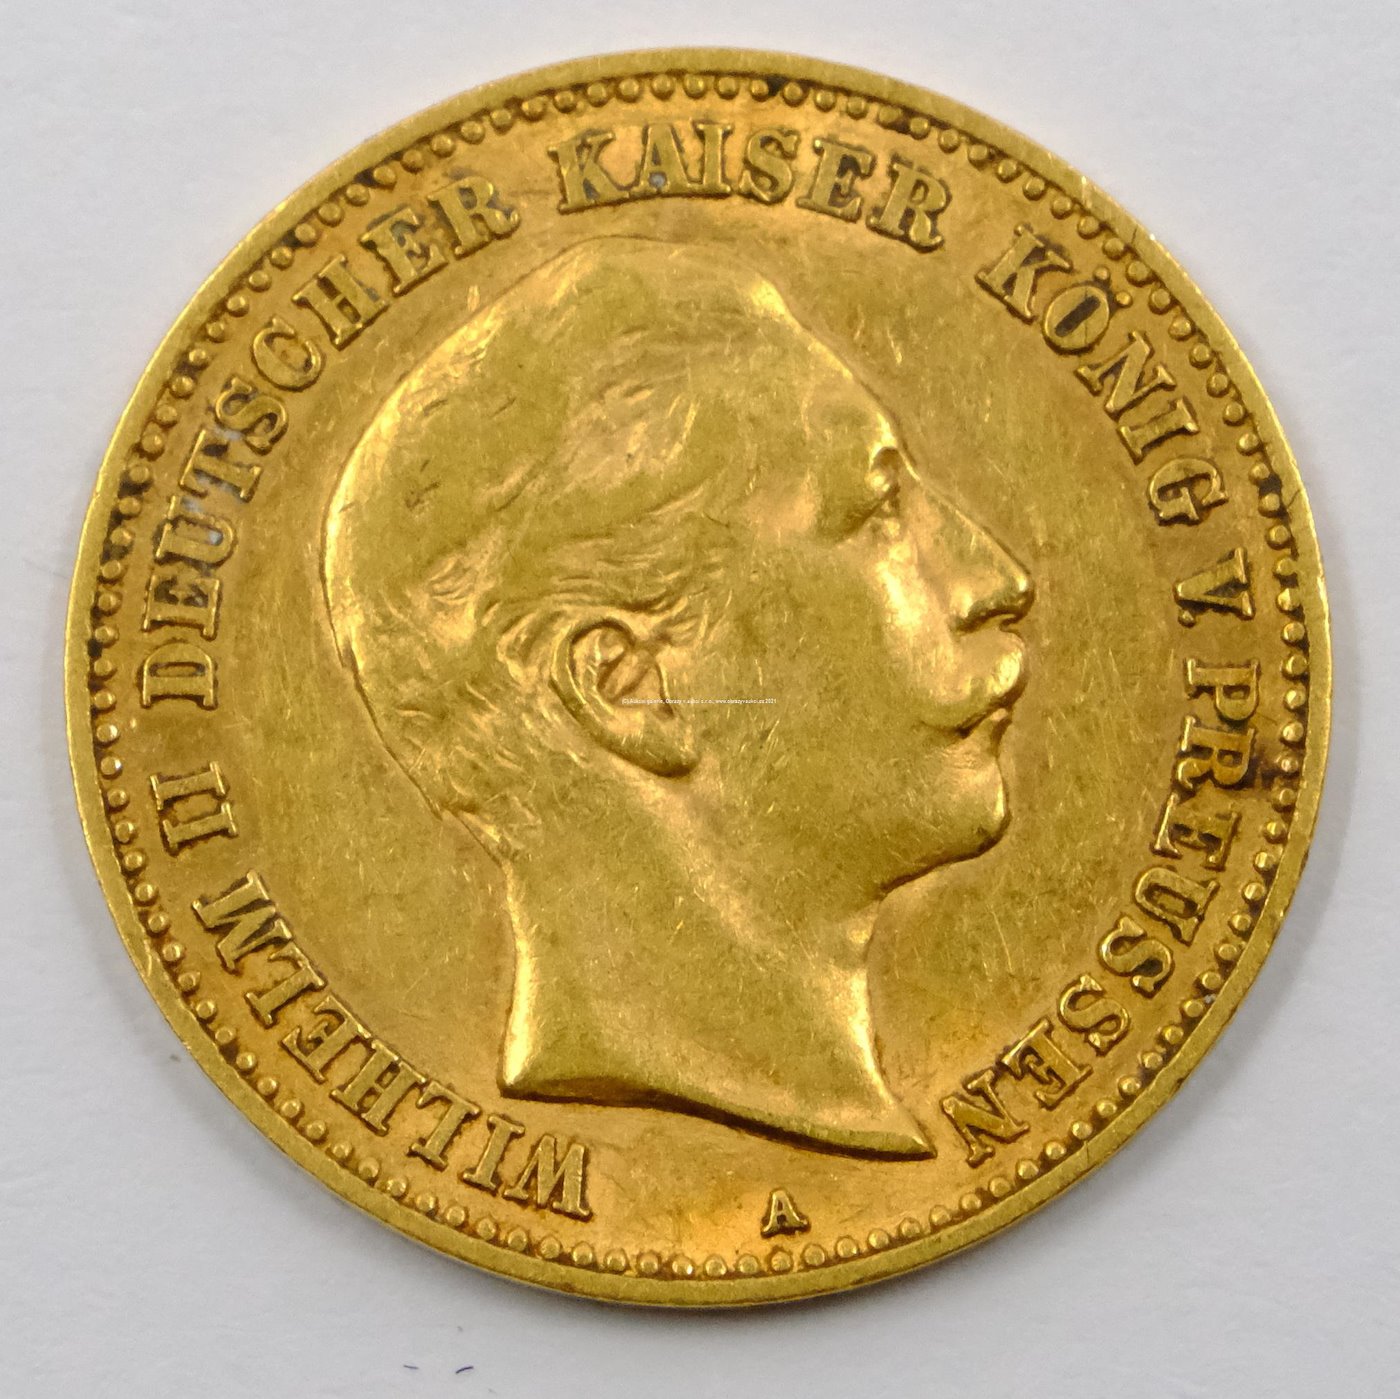 .. - Zlatá mince 10 Mark Wilhelm II. 1904. Zlato 900/1000, hrubá hmotnost 3,982g